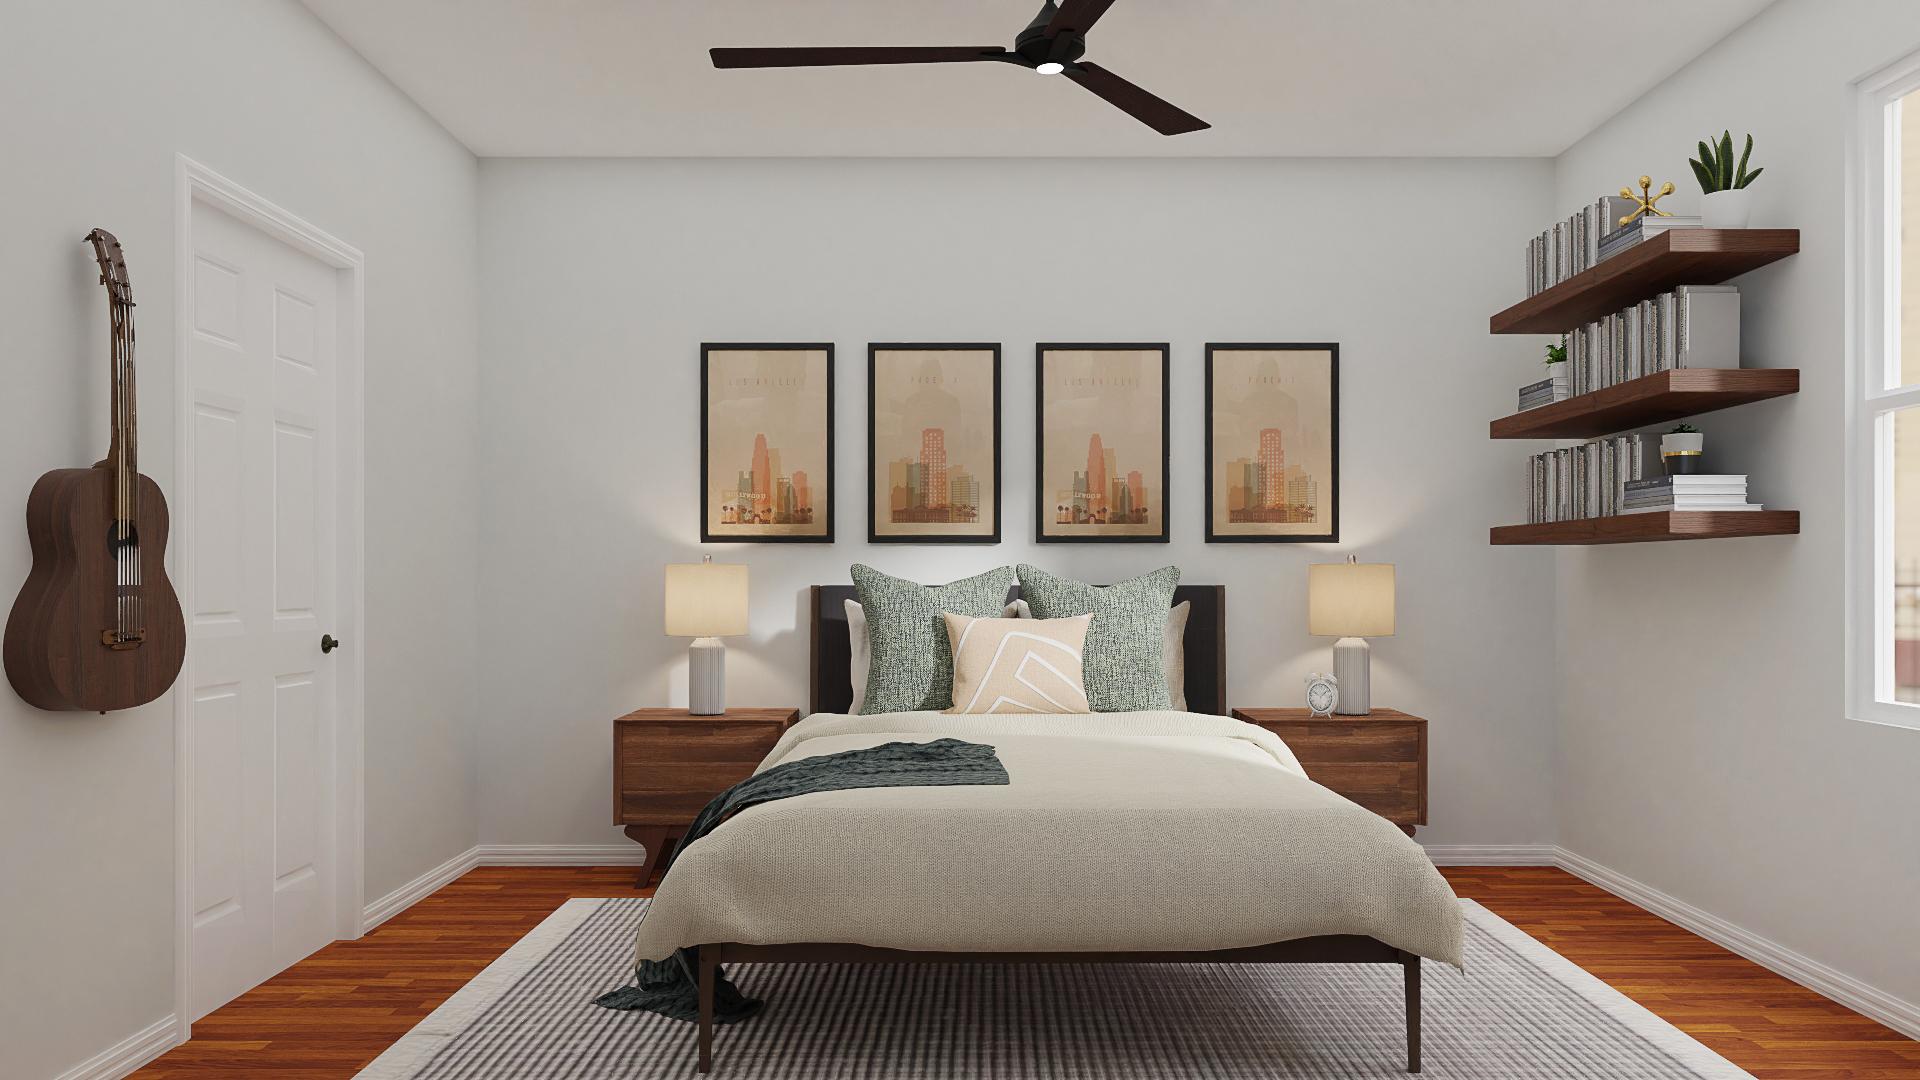 A Warm & Friendly Mid-Century Modern Bedroom